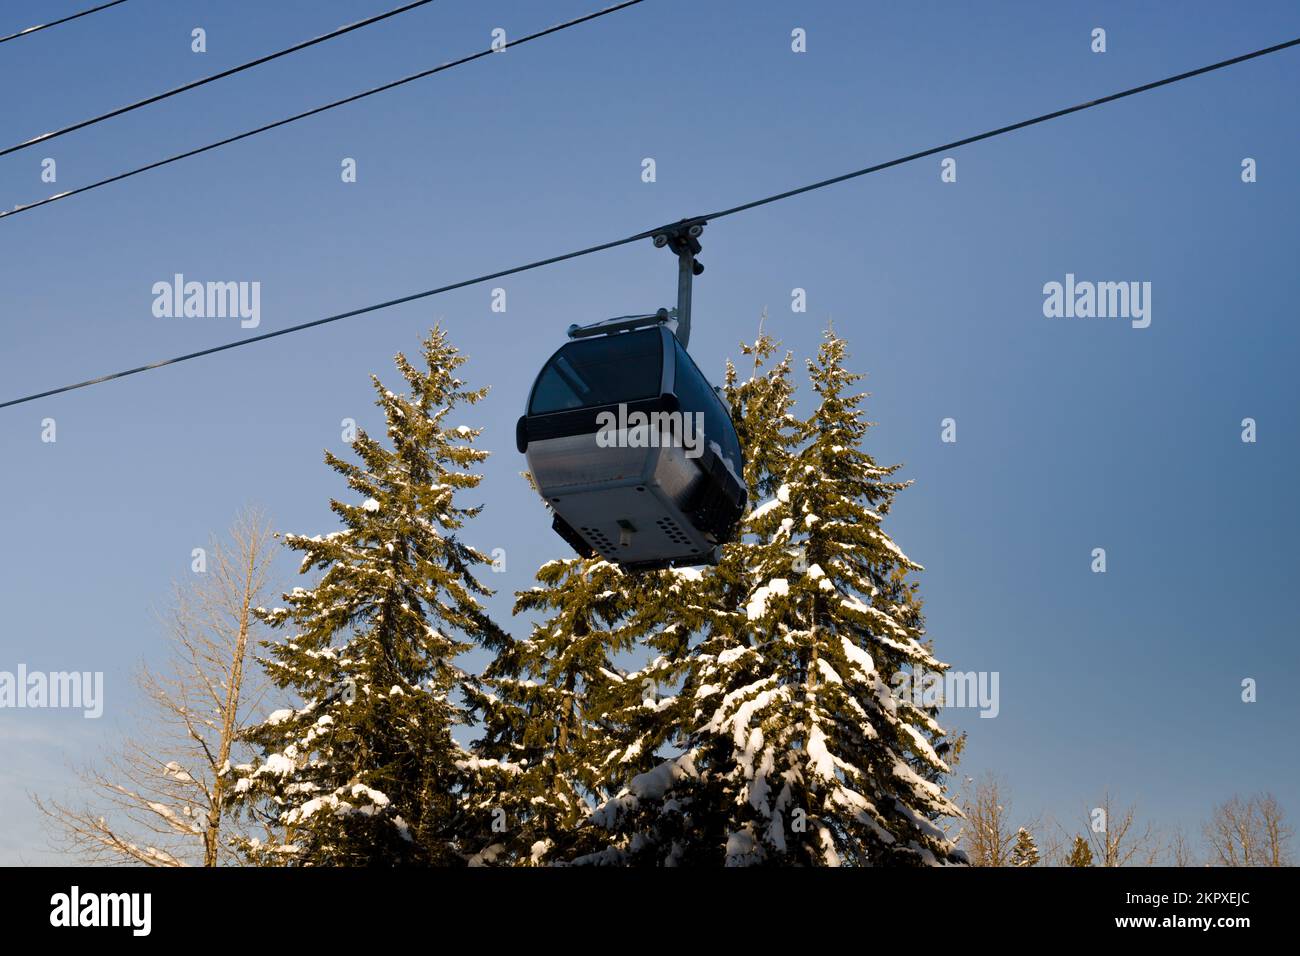 Ski resort - winter season - sky gondola, ski lift. Snowboarding, Sunny day, pure snow, forest pine trees, mountain peaks view. Winter olympic games. Stock Photo